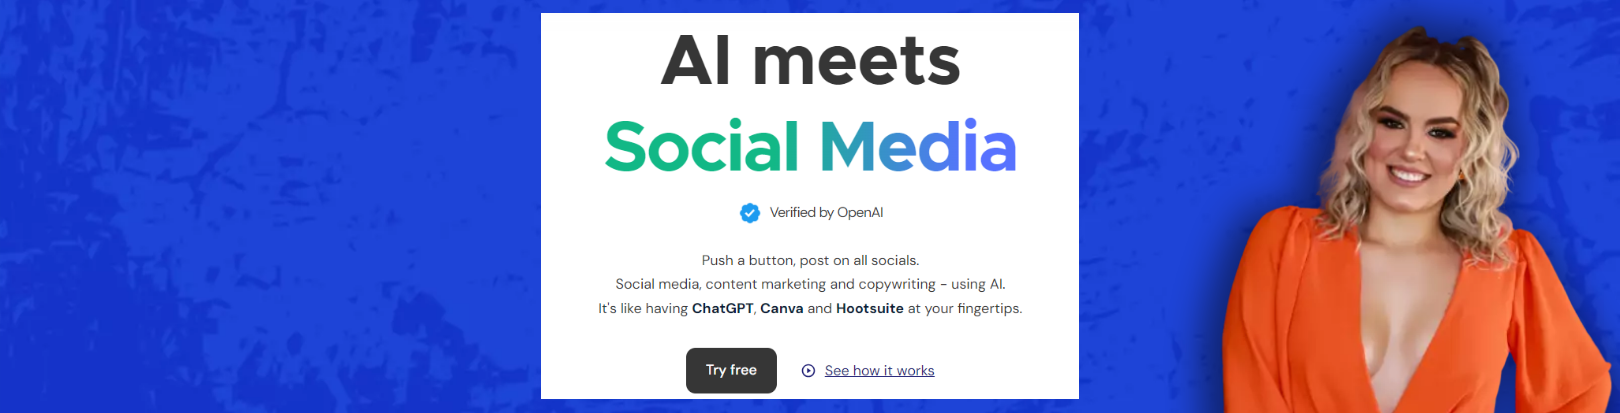 Social media, content marketing and copywriting - using AI.